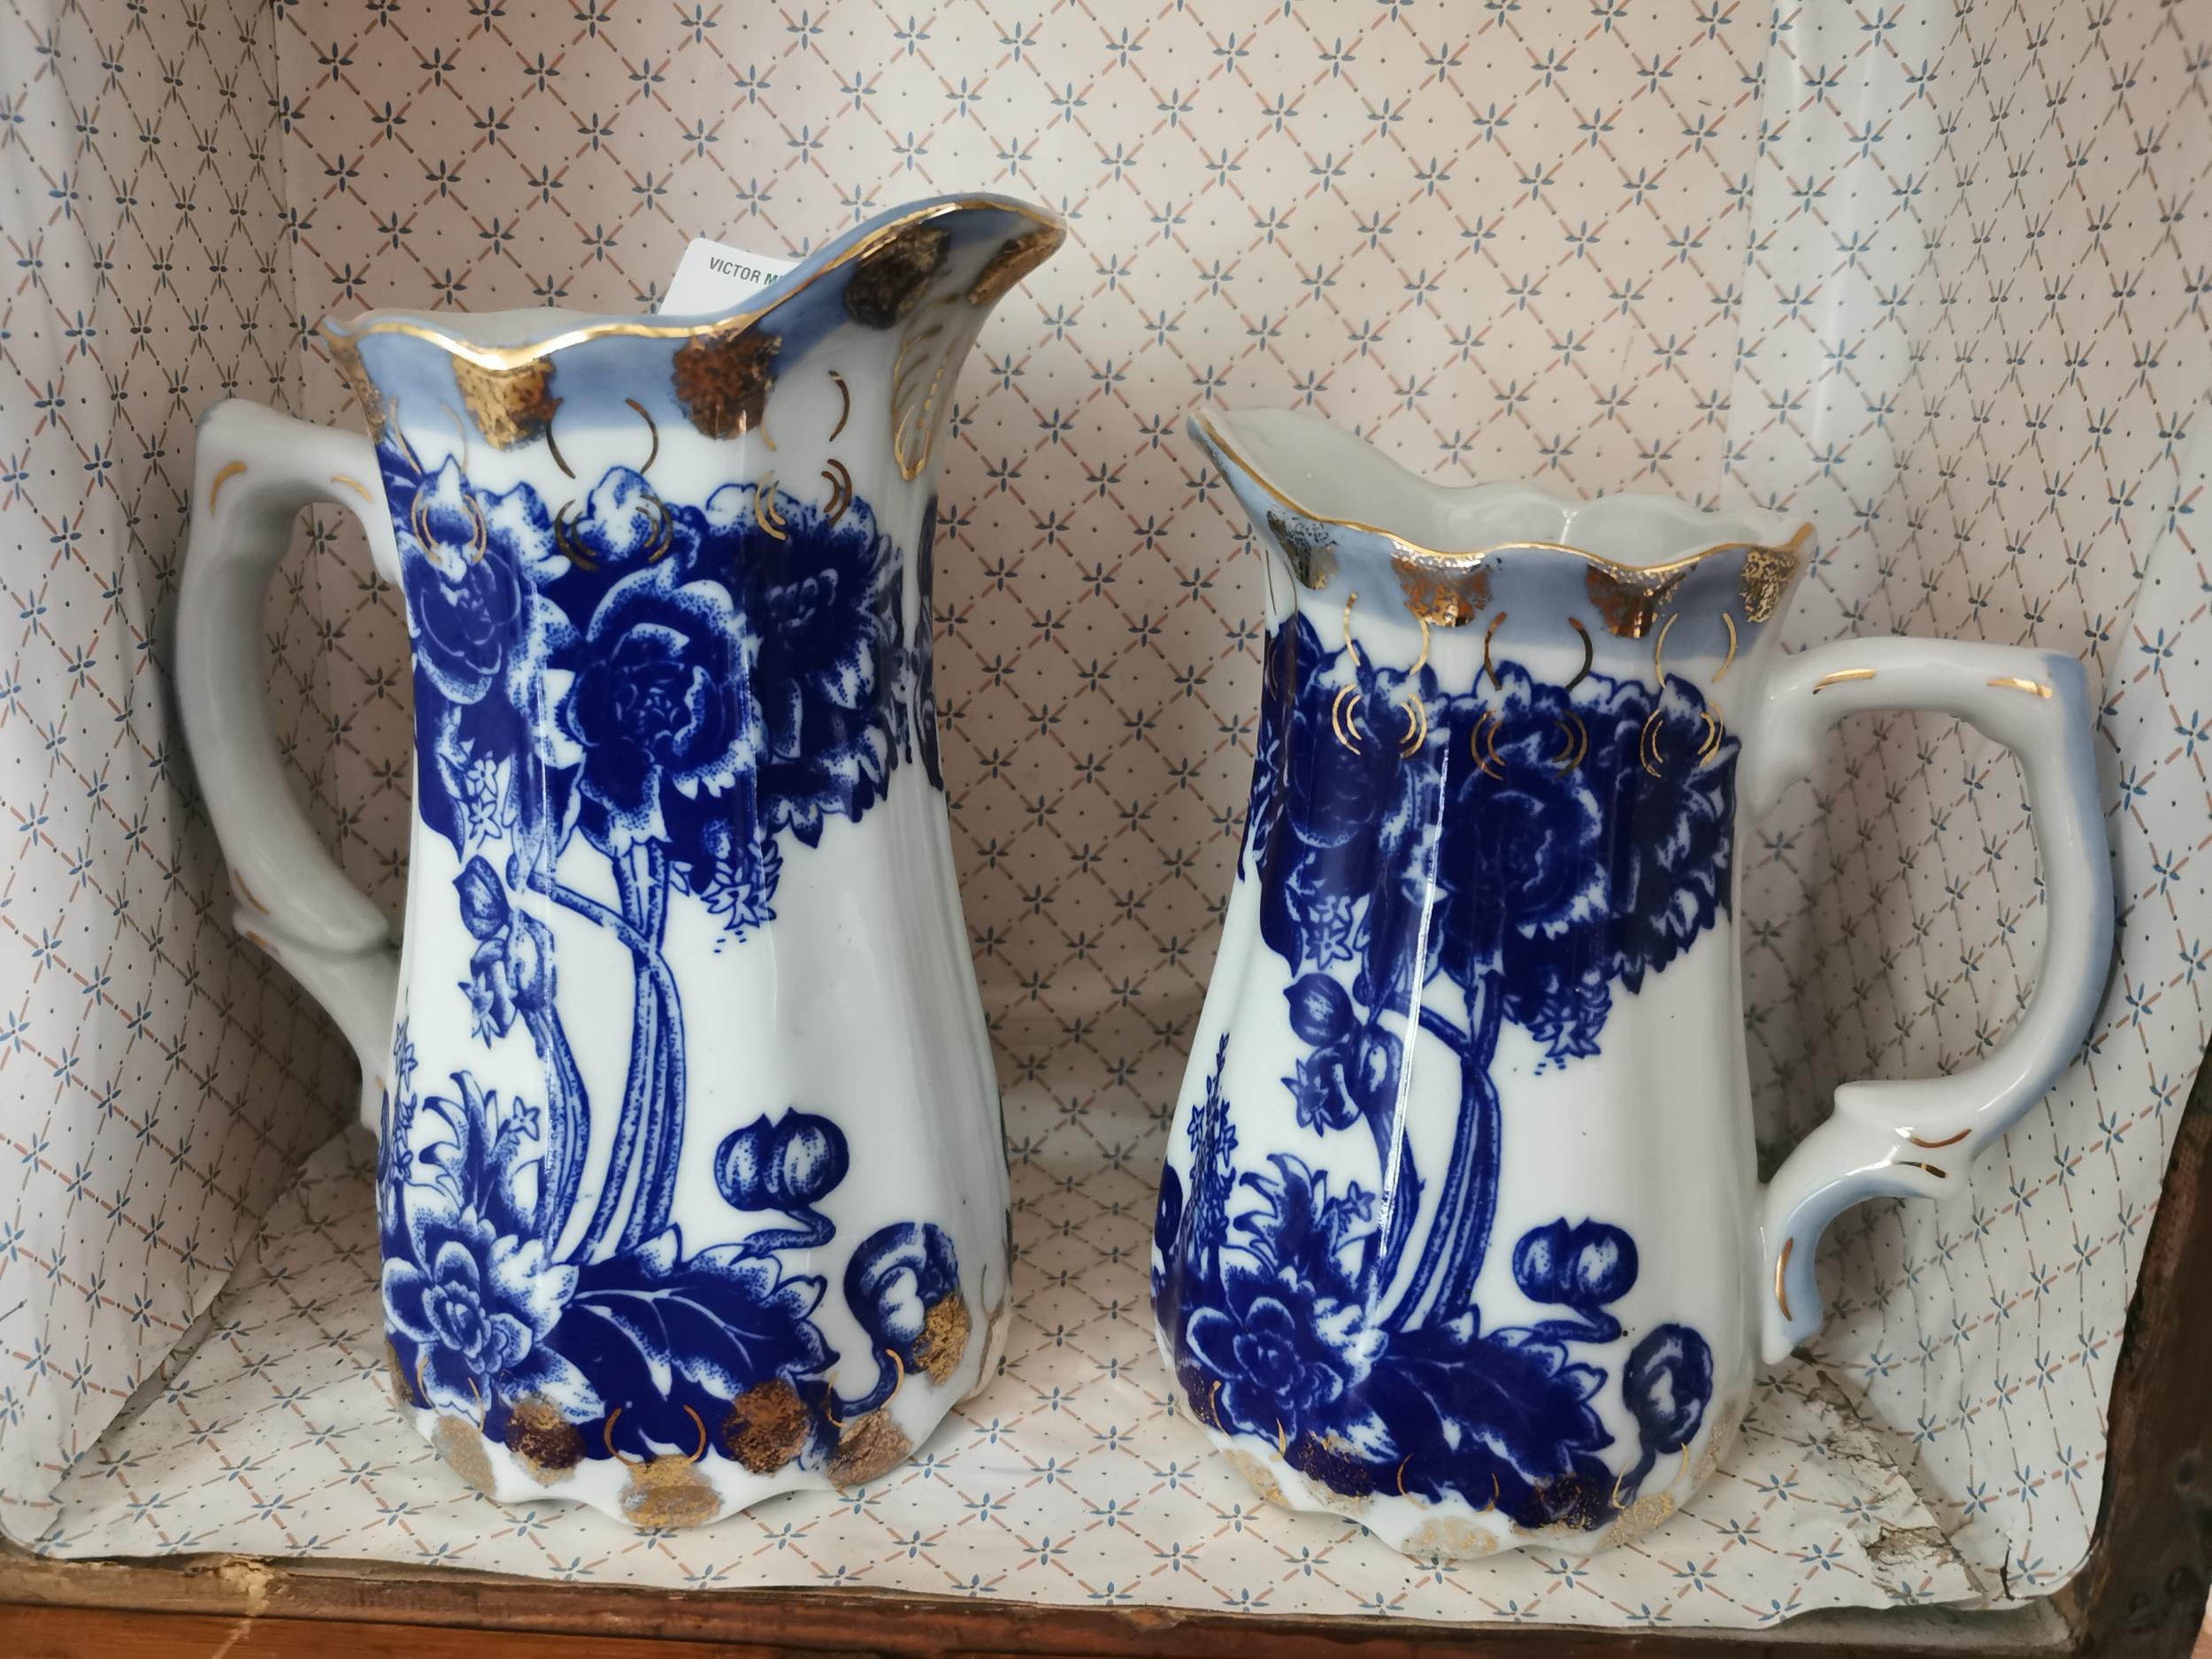 Set of five graduated blue and white ceramic jugs { 21cm H X 14cm Dia - 11cm H X 9cm Dia }. - Image 4 of 4